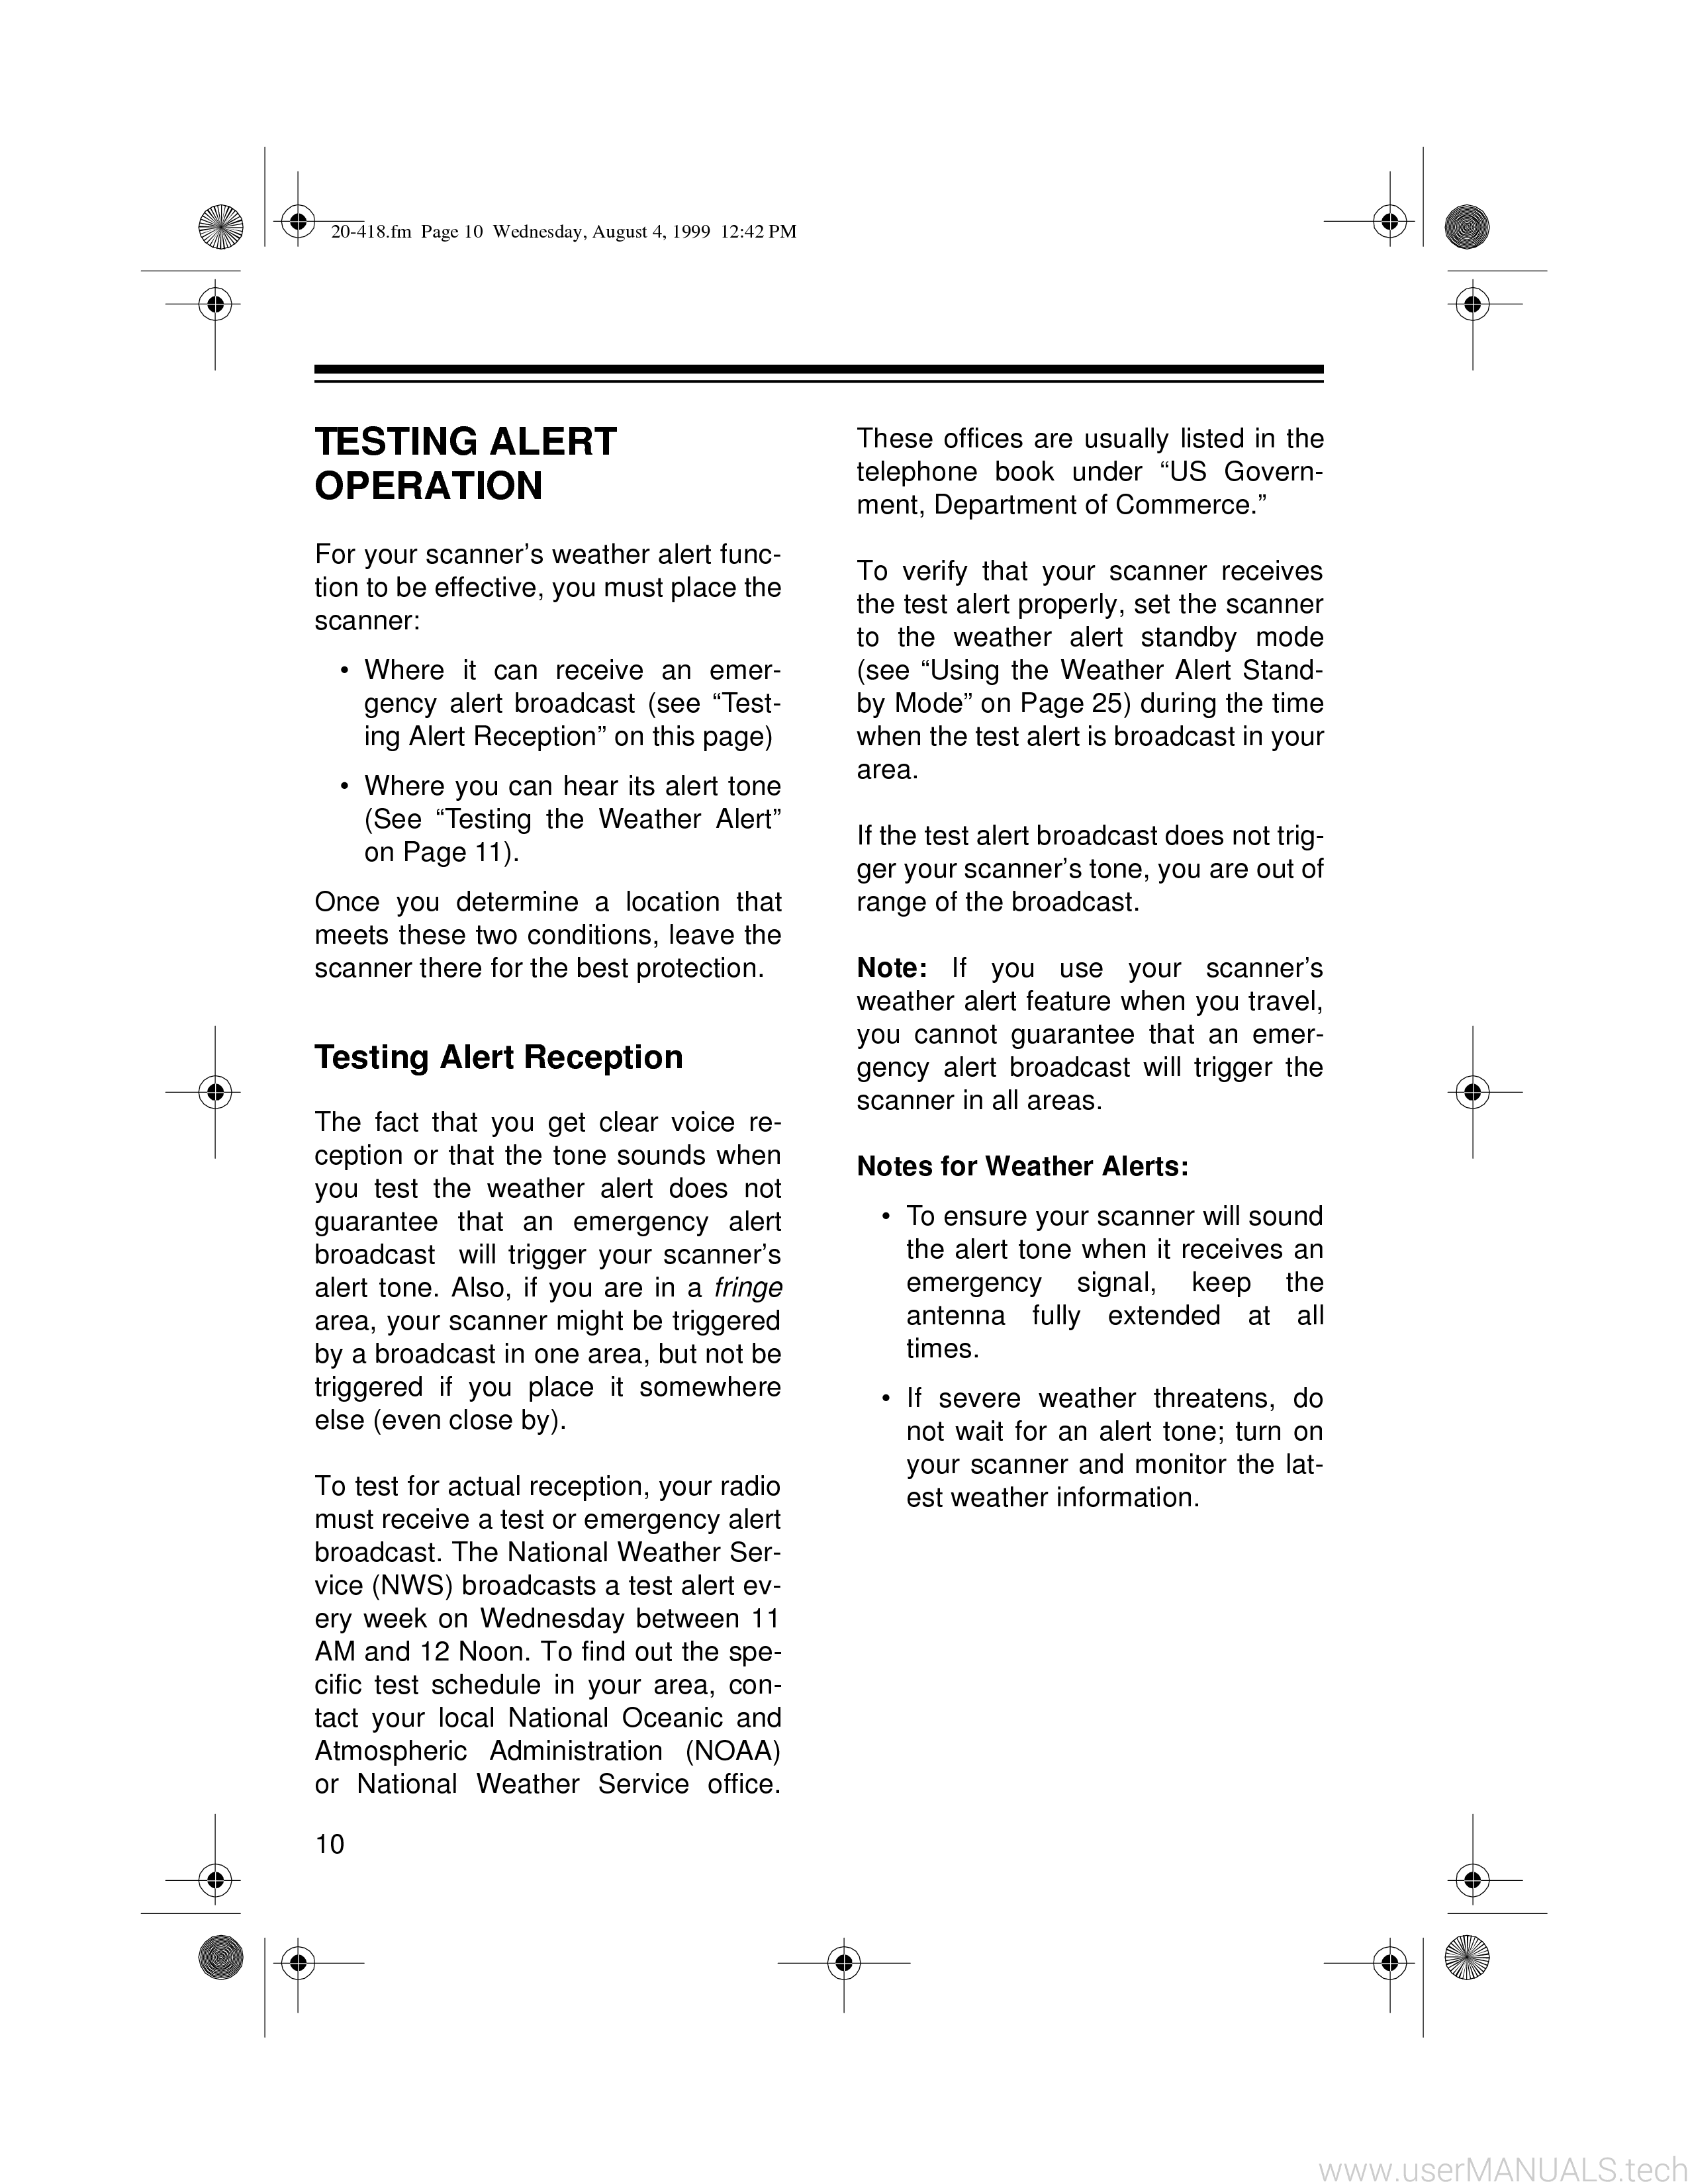 radio shack weather alert scanner pro 82 manual